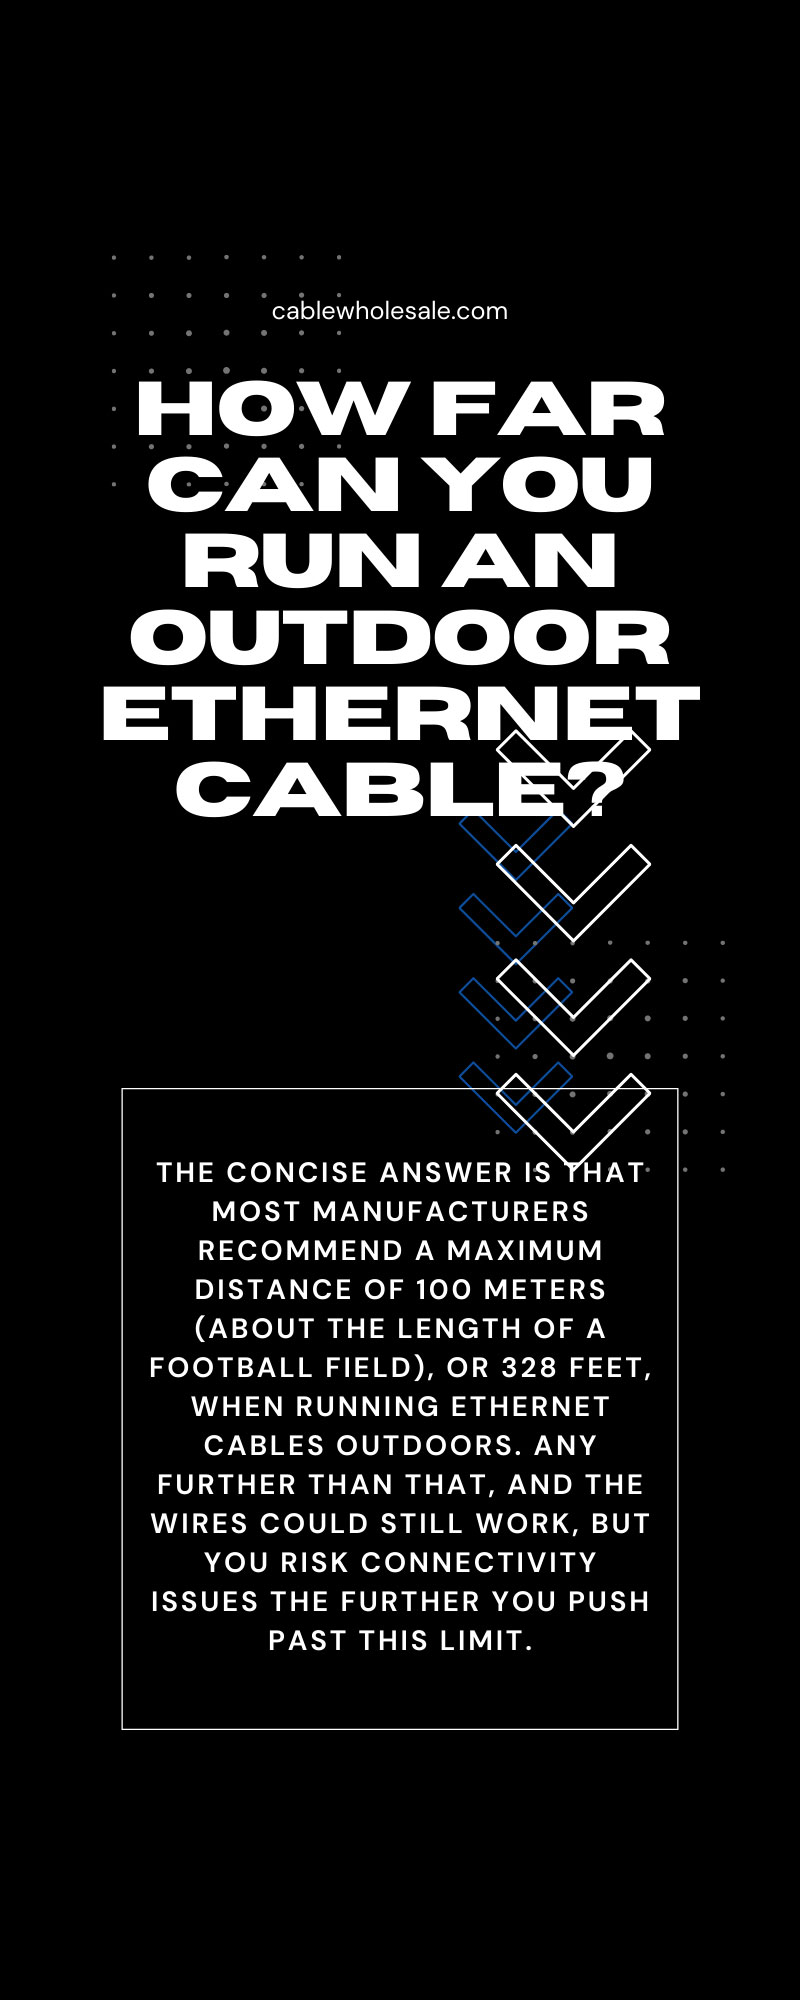 How Far Can You Run an Outdoor Ethernet Cable?